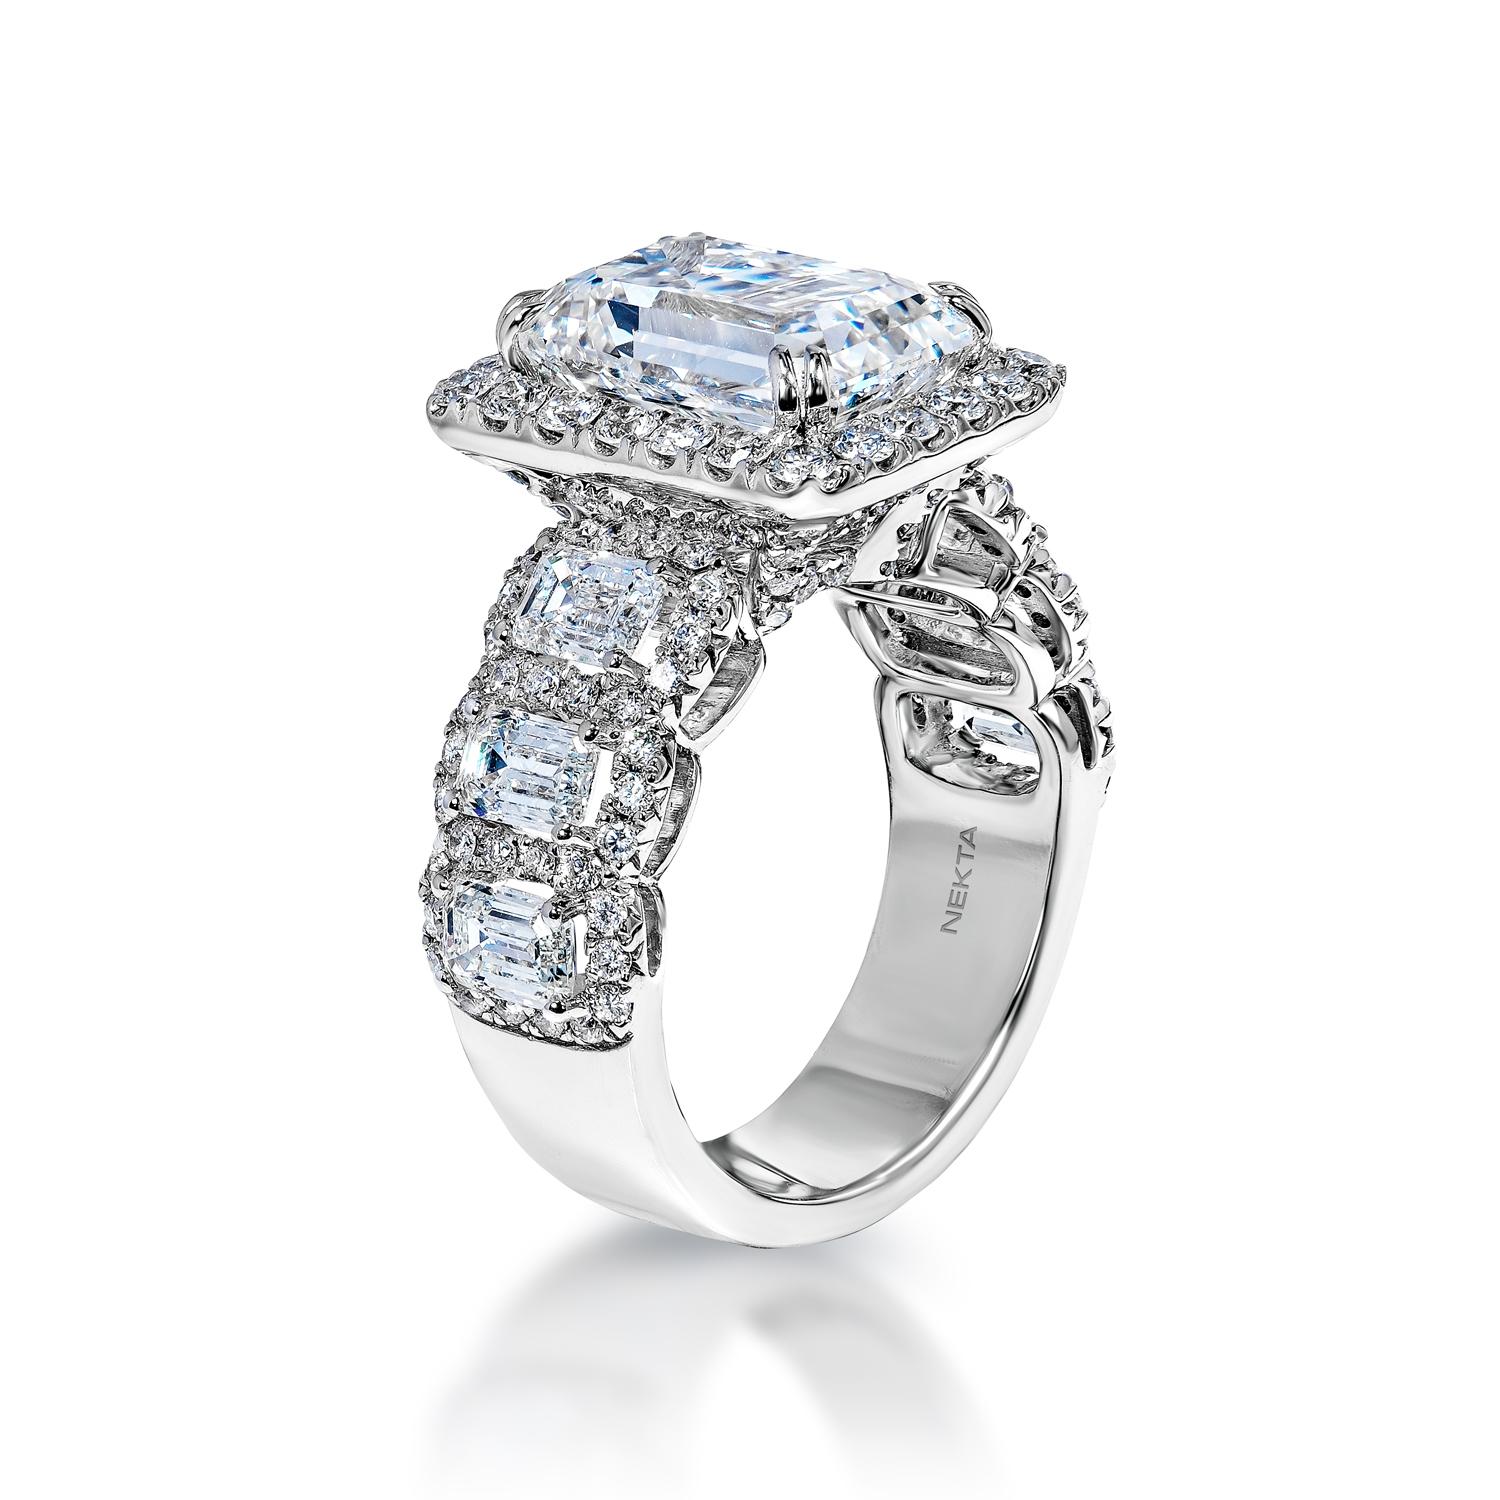 8 carat emerald cut diamond ring price